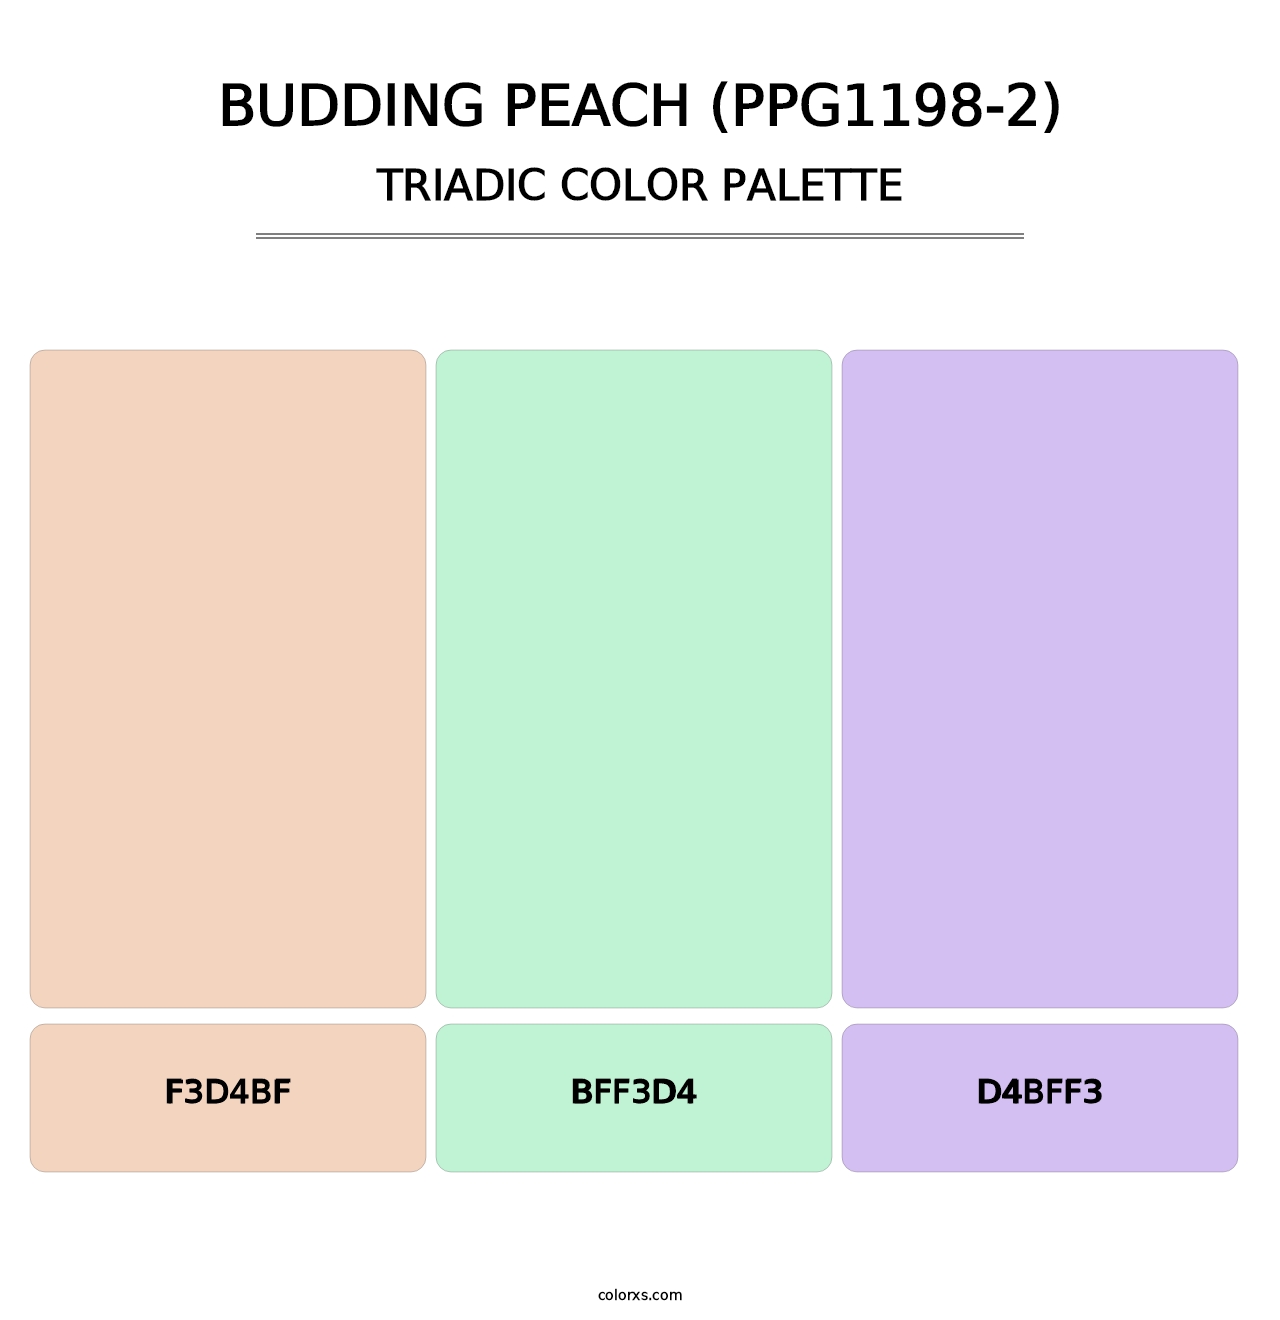 Budding Peach (PPG1198-2) - Triadic Color Palette